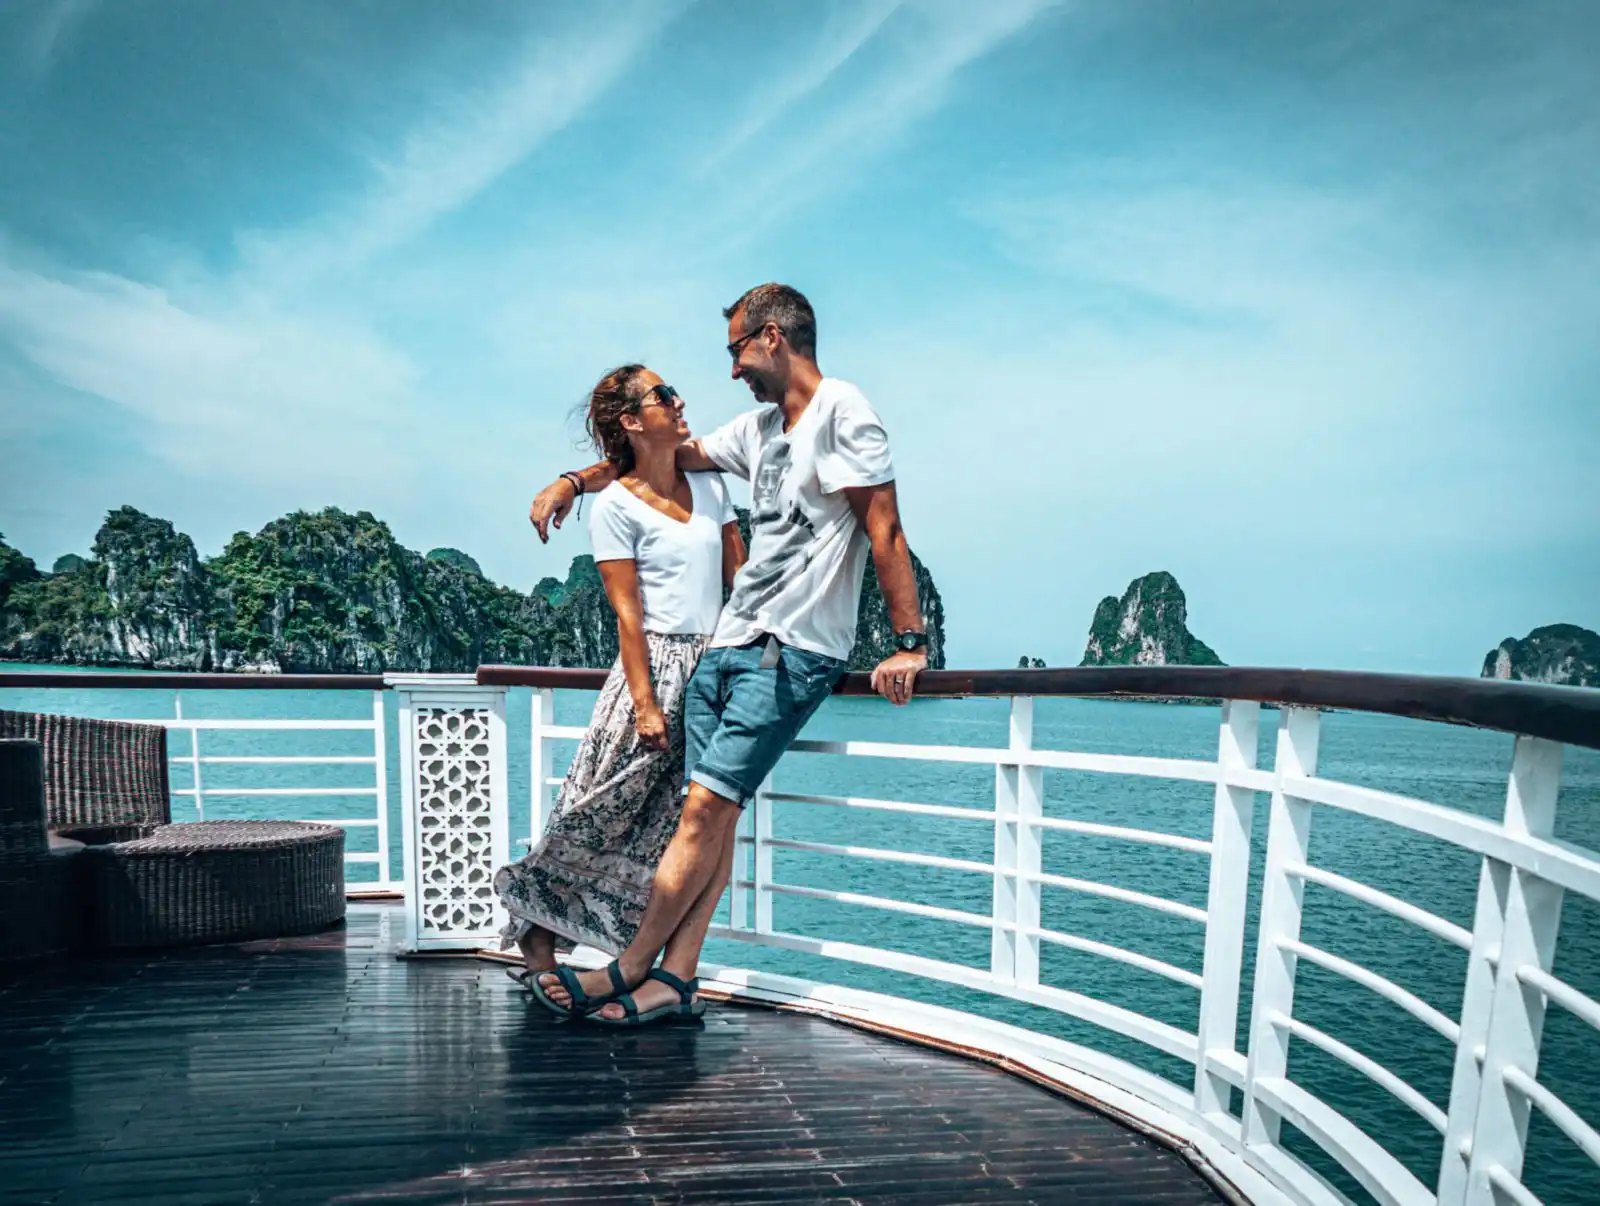 Bai Tu Long Bay tour on the deck of Paloma Cruises